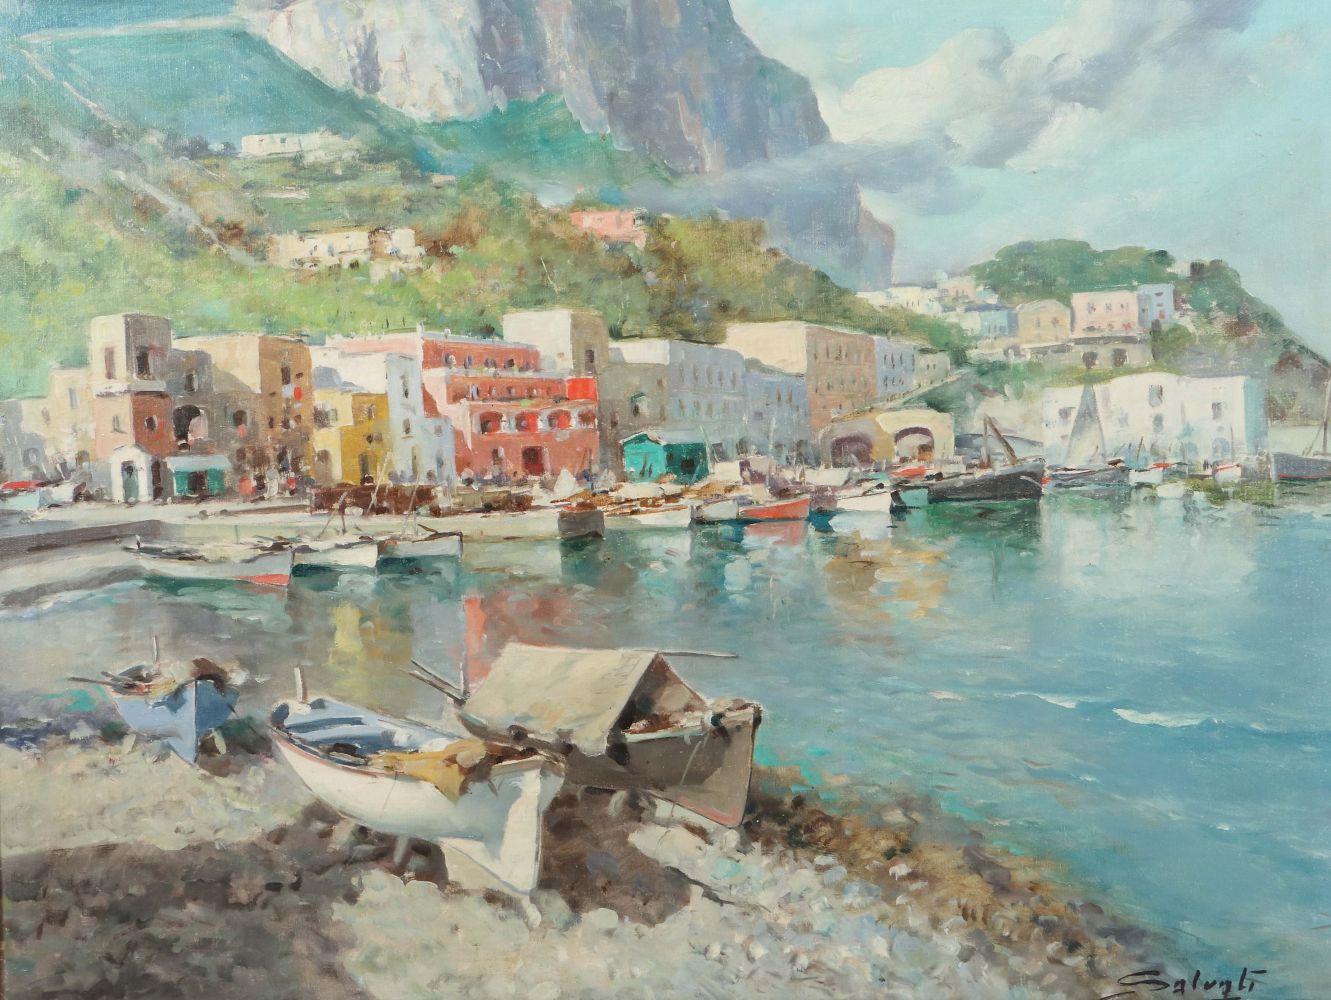 Salvati, Giuseppe 1900 - 1968,